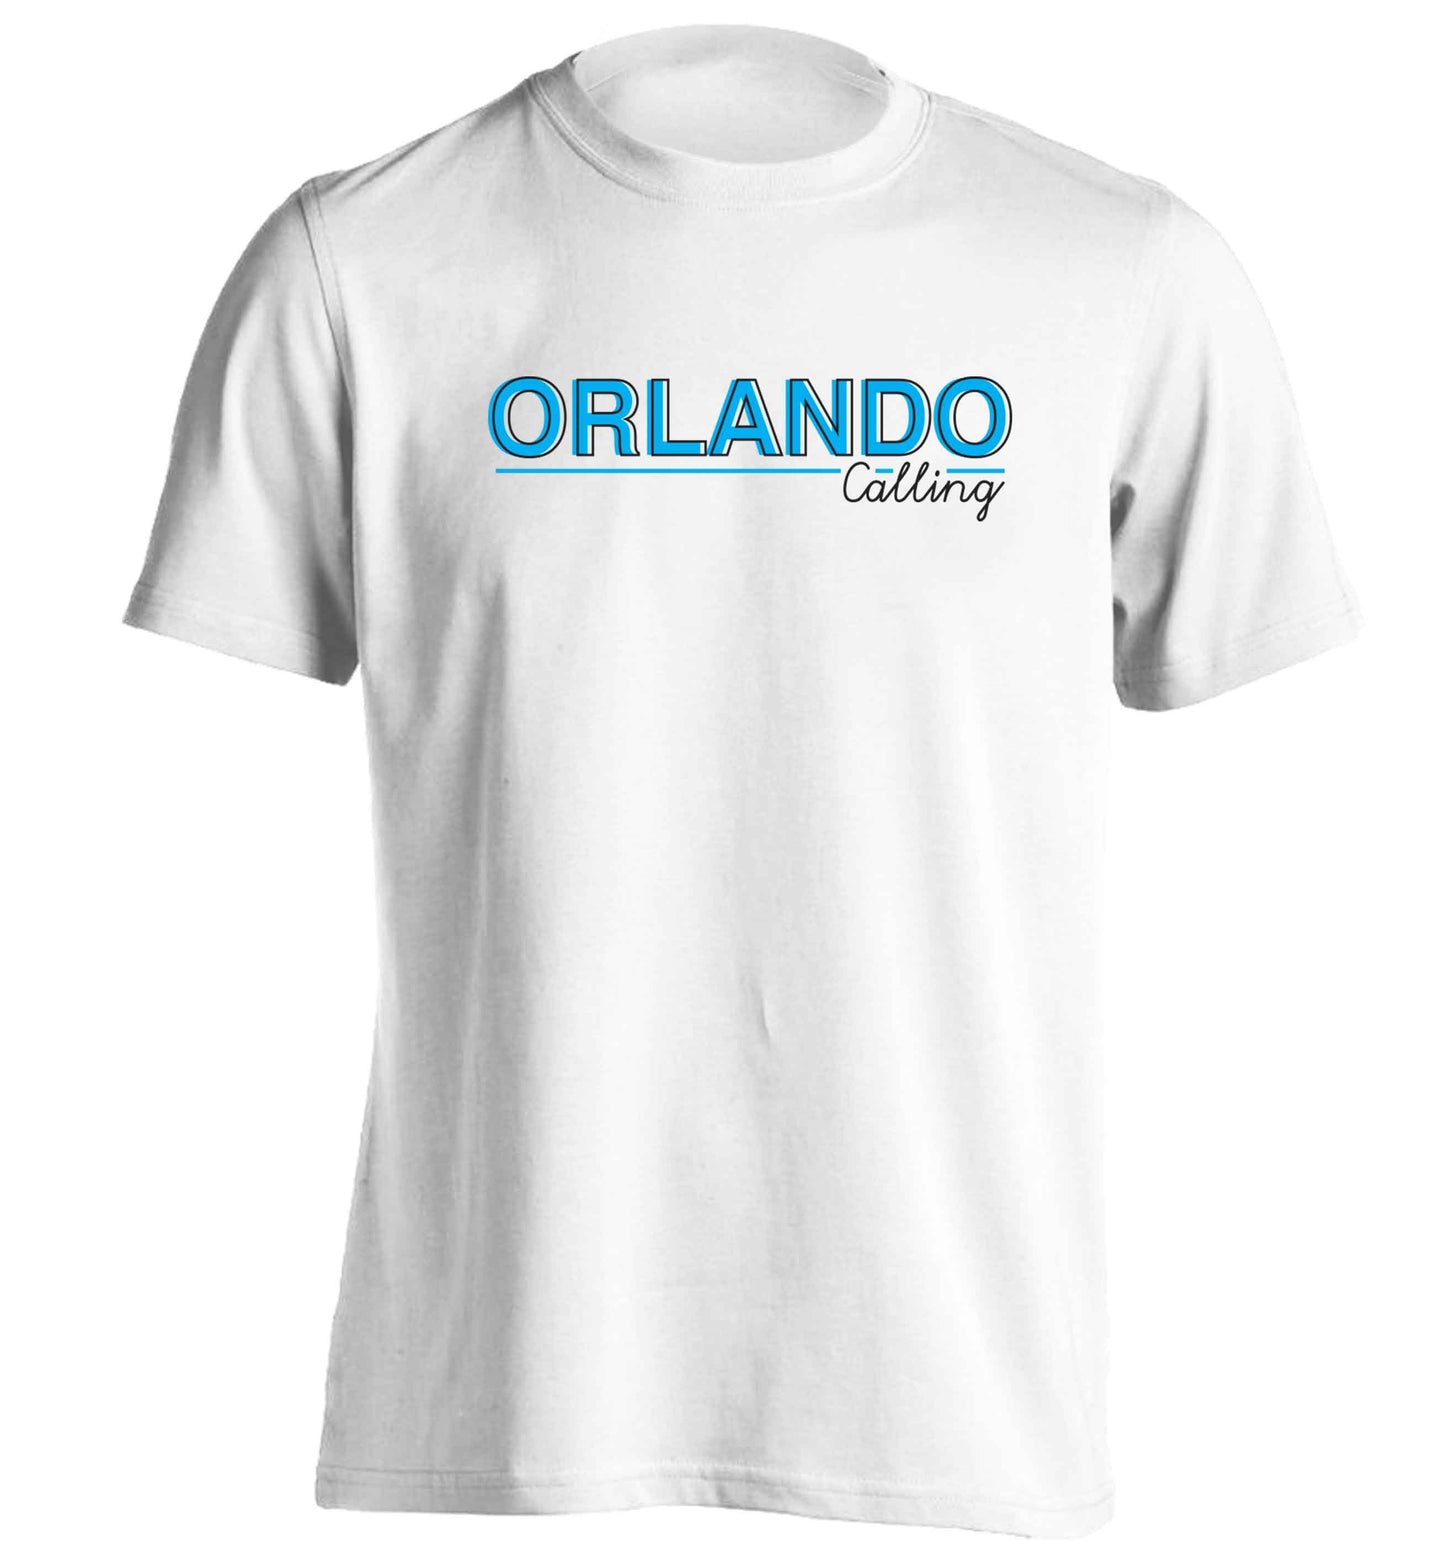 Orlando calling adults unisex white Tshirt 2XL